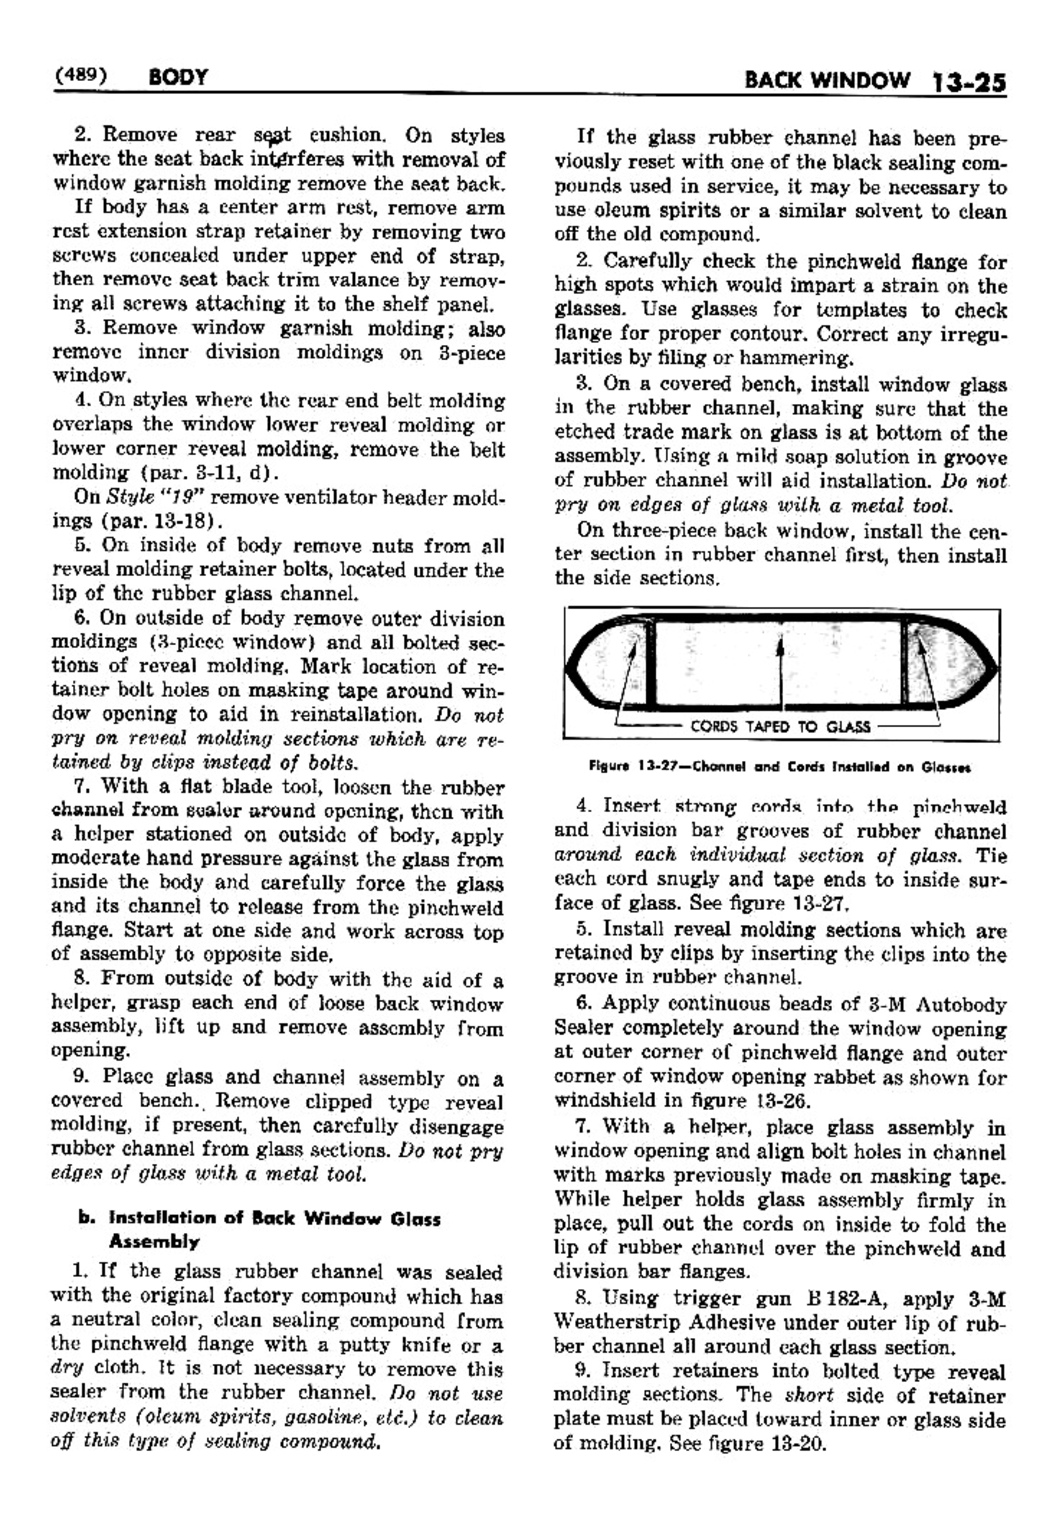 n_14 1952 Buick Shop Manual - Body-025-025.jpg